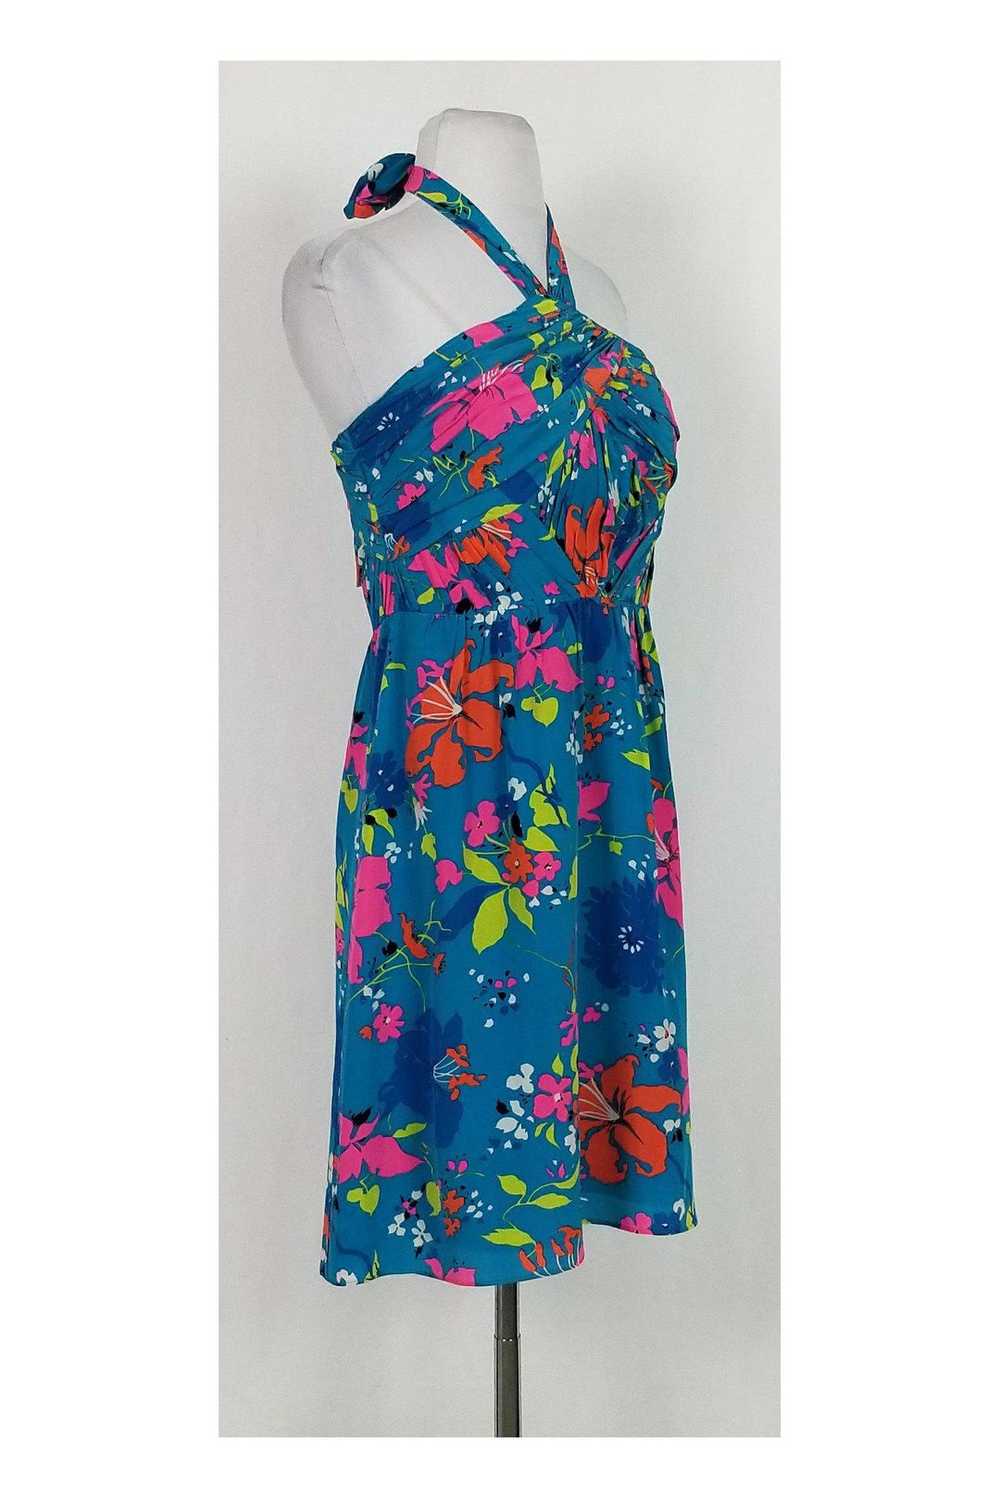 Shoshanna - Blue Floral Print Dress Sz 6 - image 2